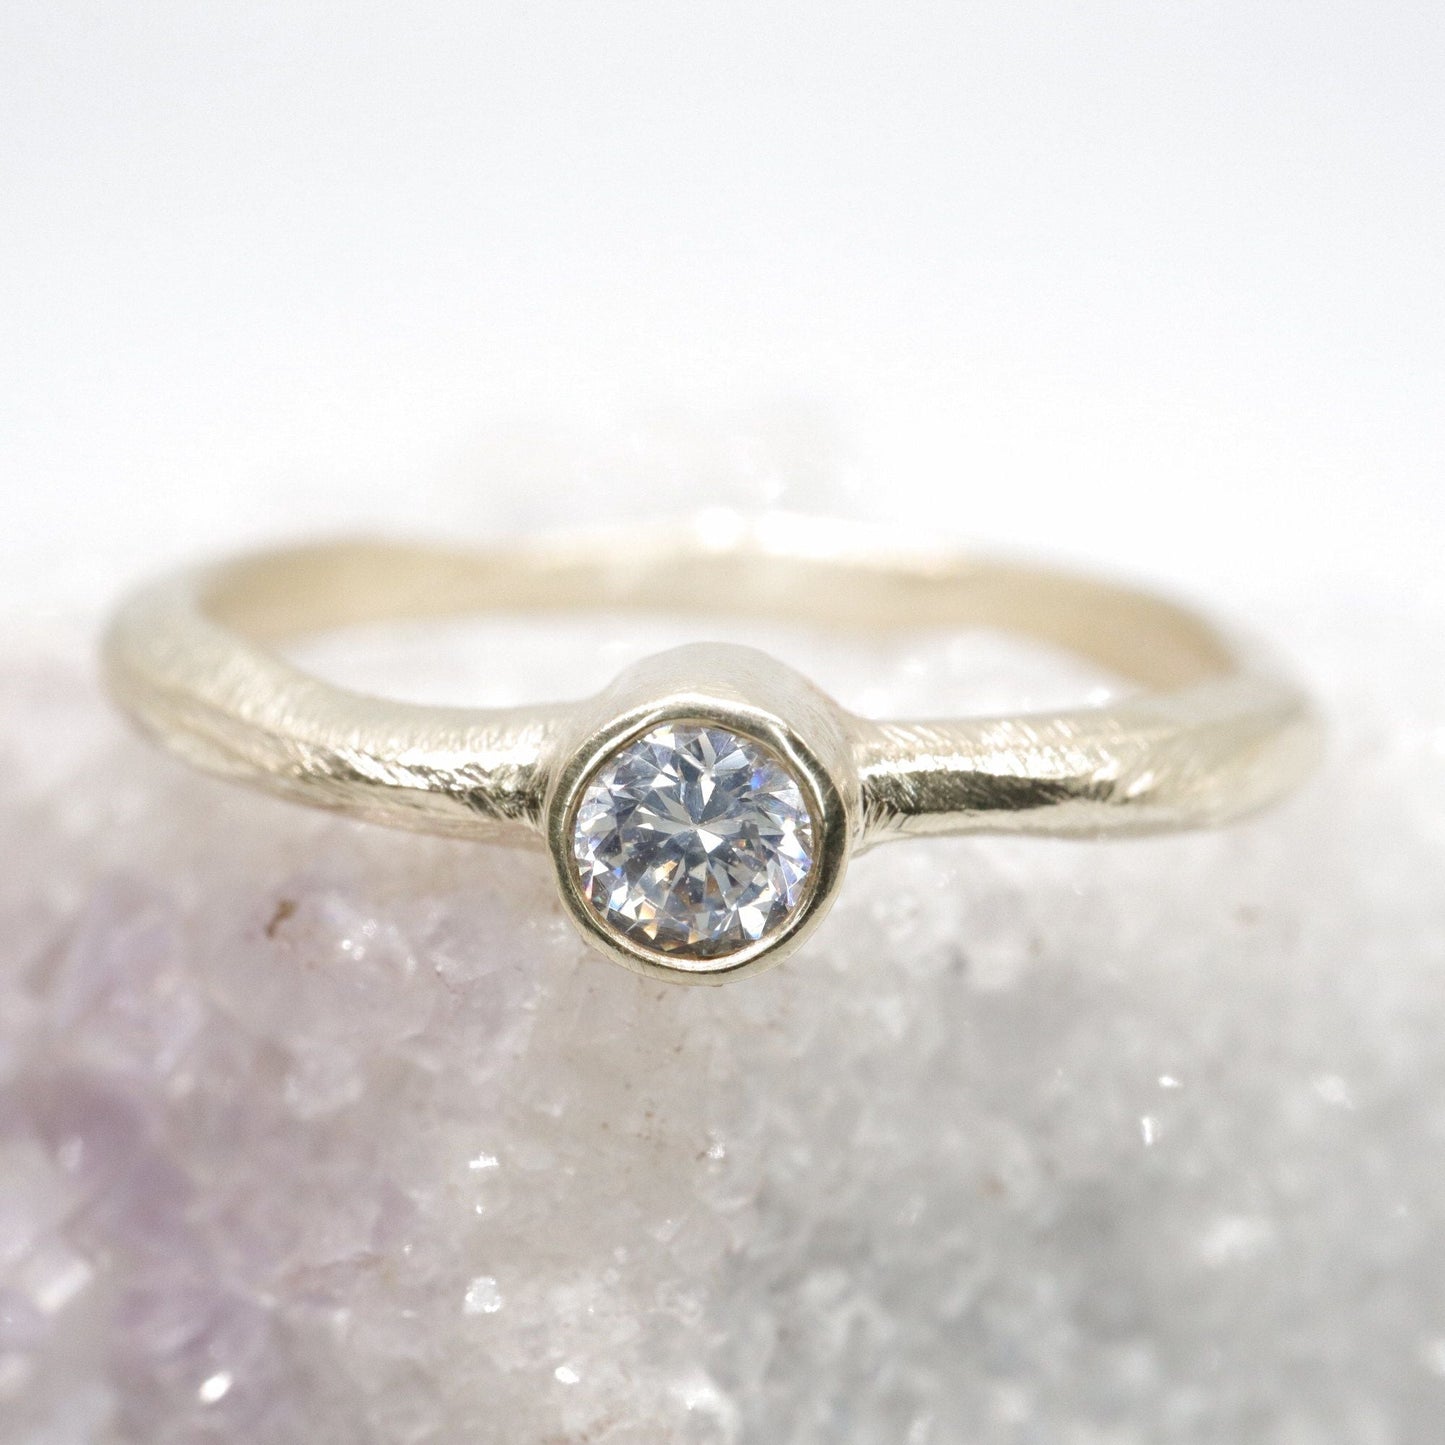 Yellow gold 0.25ct diamond solitaire minimalist narrow ring, Beach Sand design